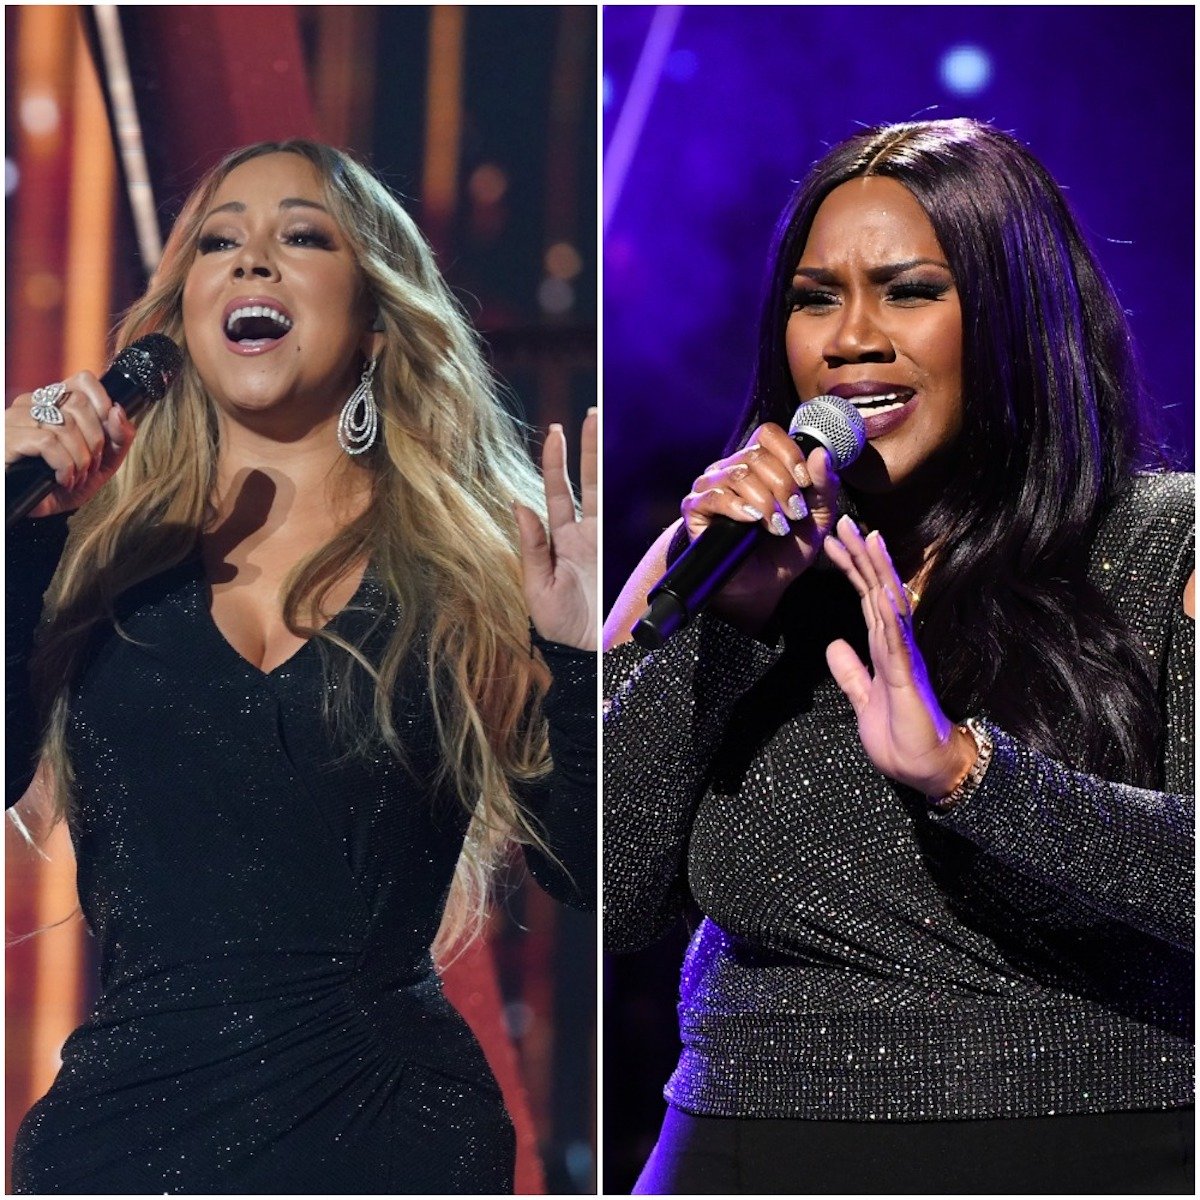 Mariah Carey and Kelly Price split photo on stage singing